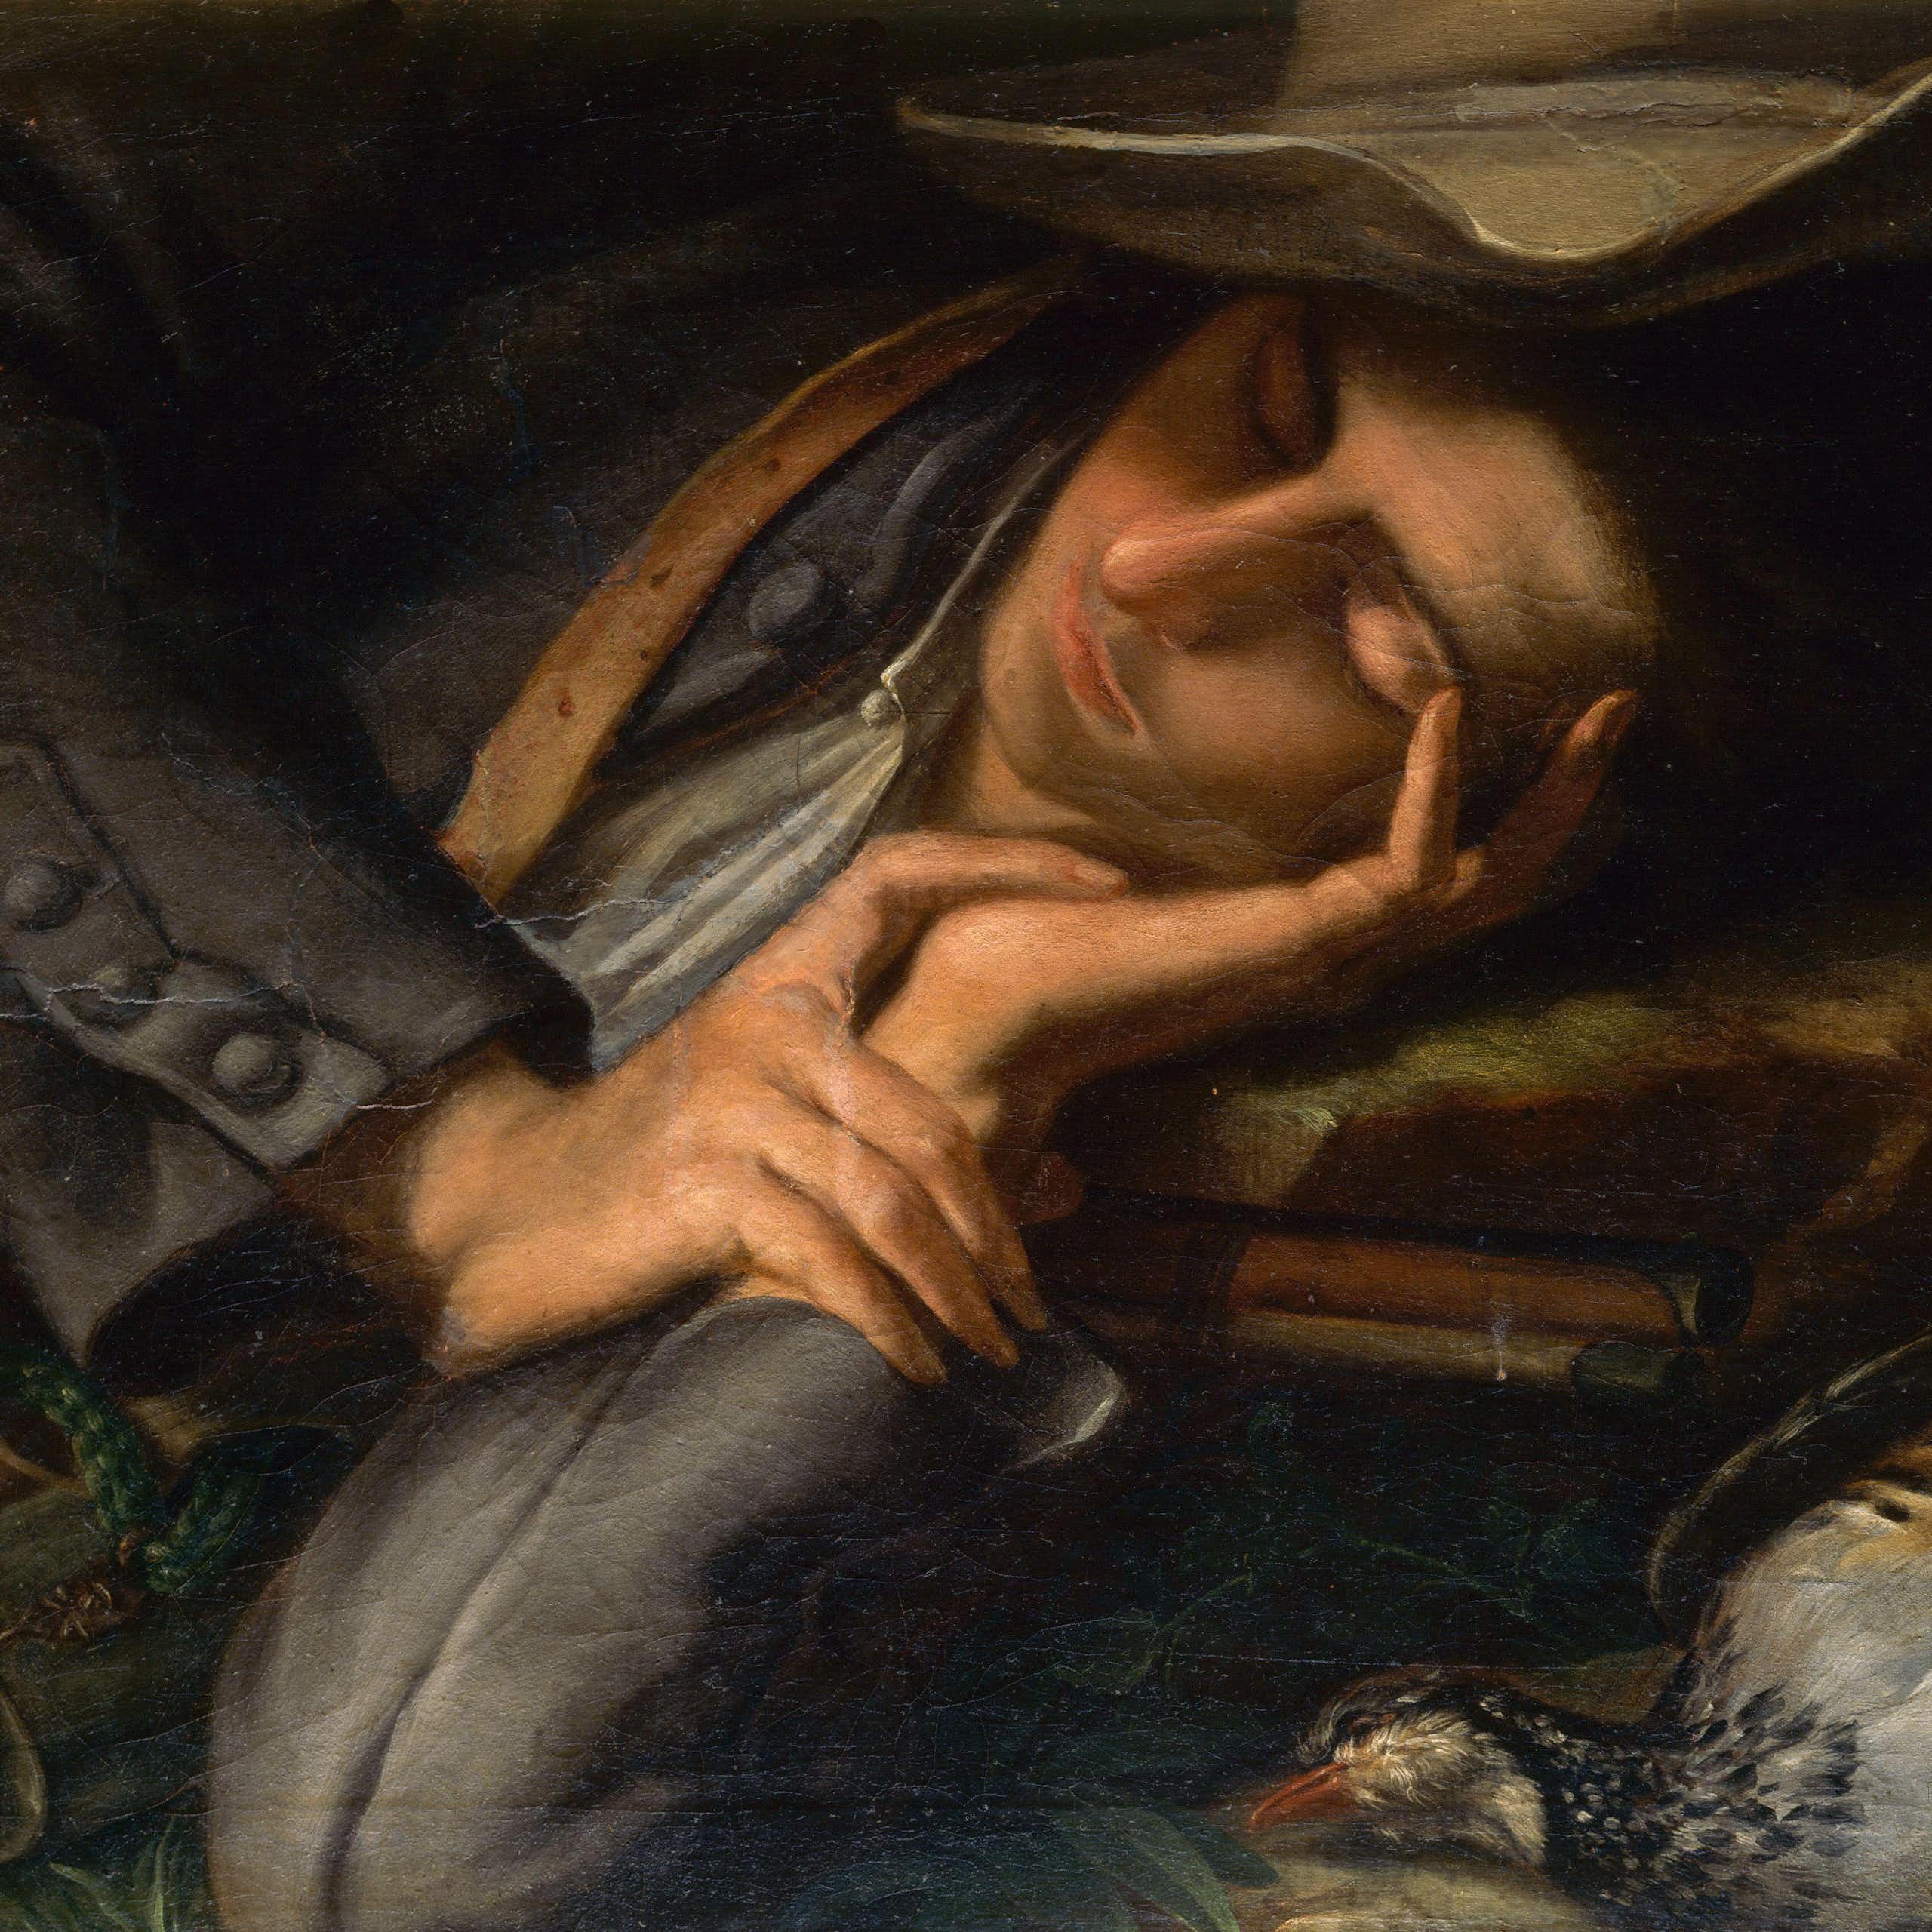 An old painting depicting a man asleep